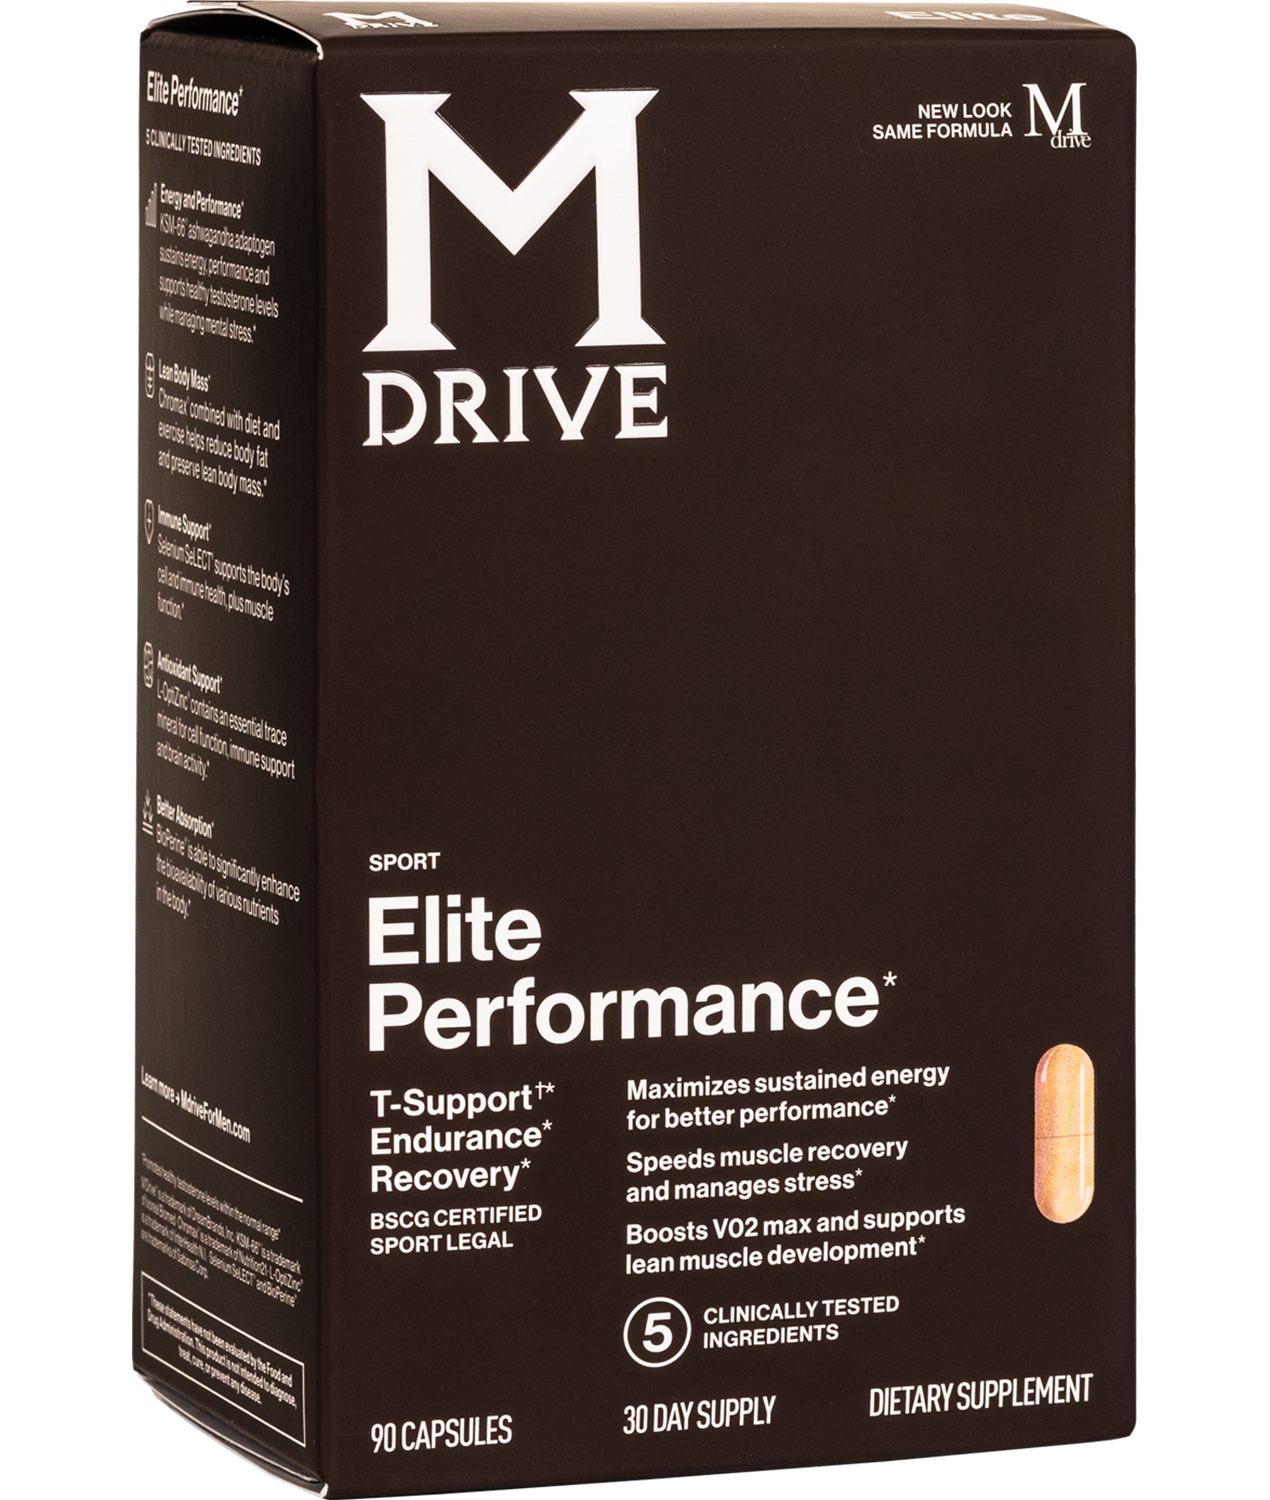 M Drive Elite